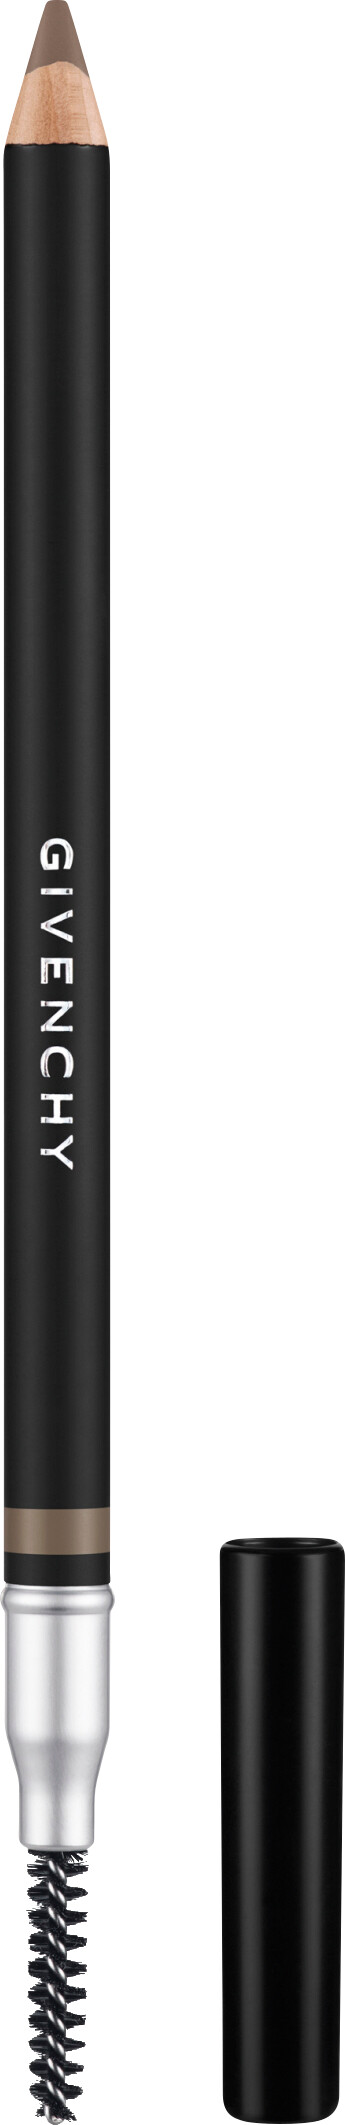 GIVENCHY Mister Eyebrow Powder Pencil 1.8g 02 - Medium